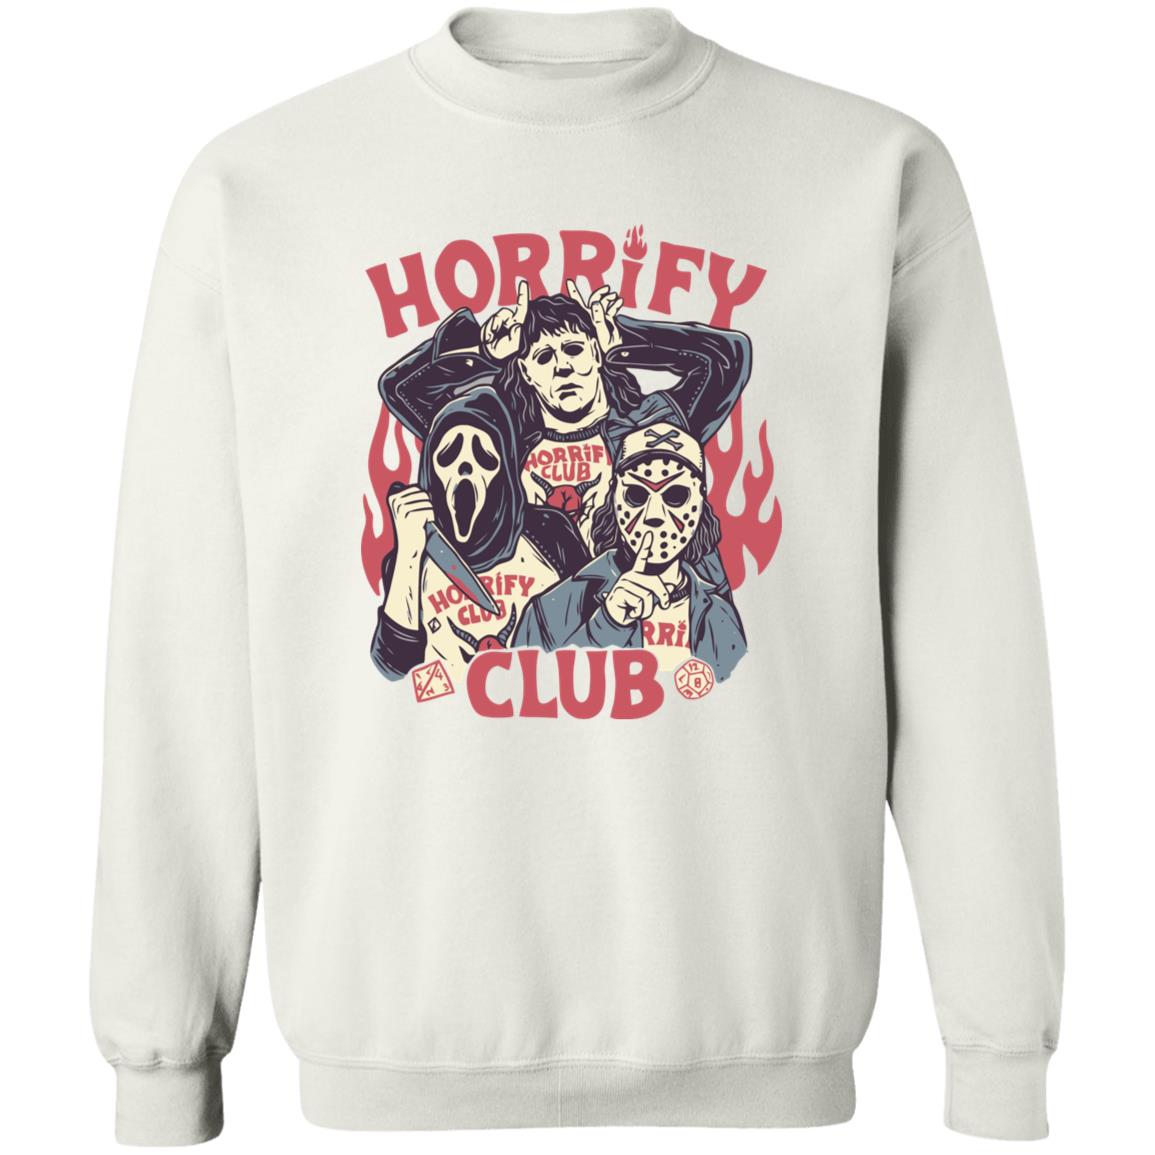 Horror Character Horrify Club Shirt 1